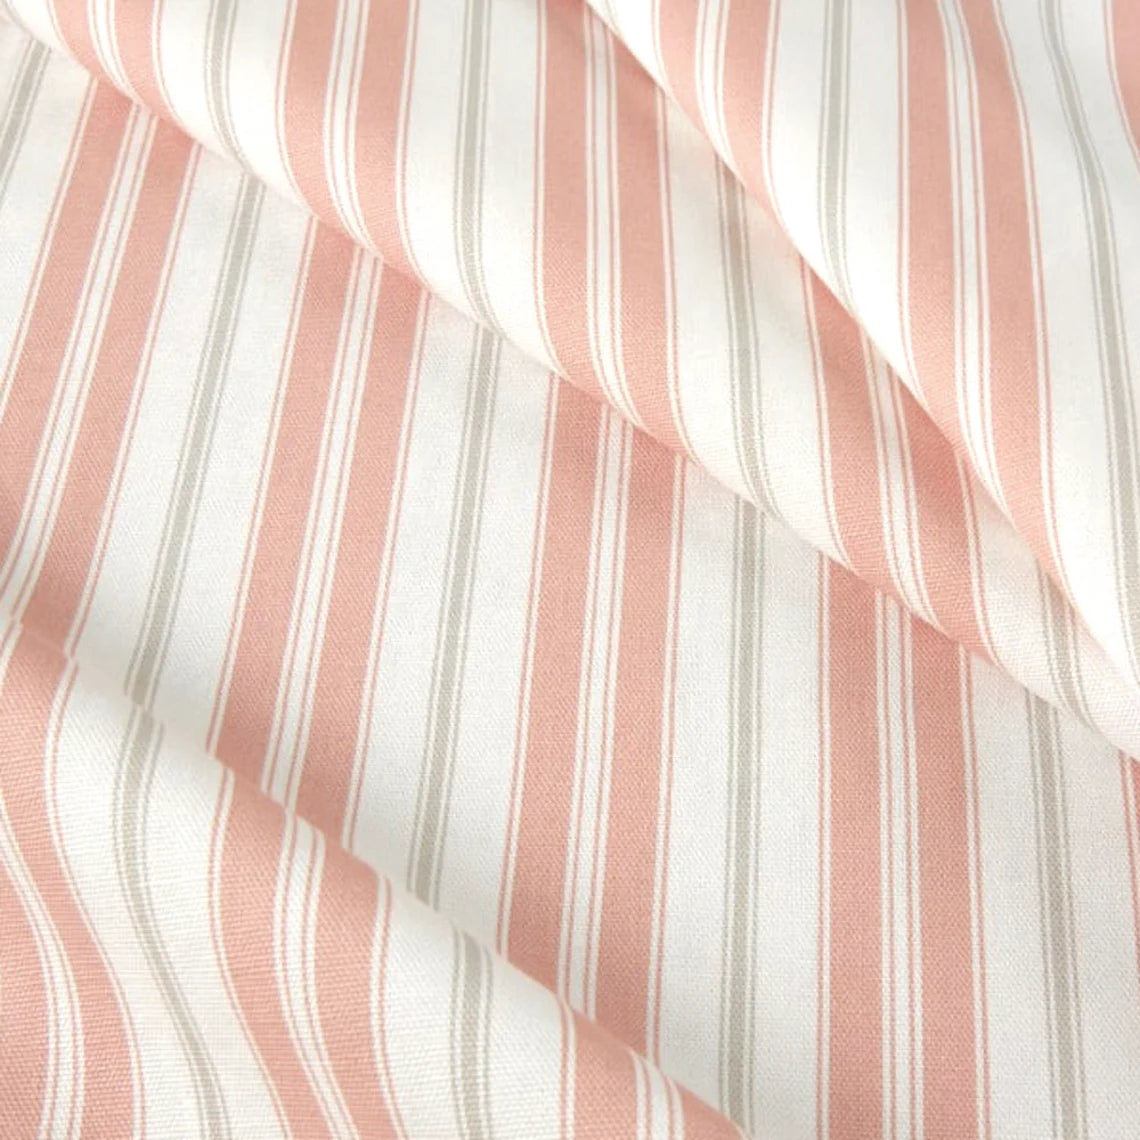 gathered bedskirt in newbury blush stripe- pink, gray, white